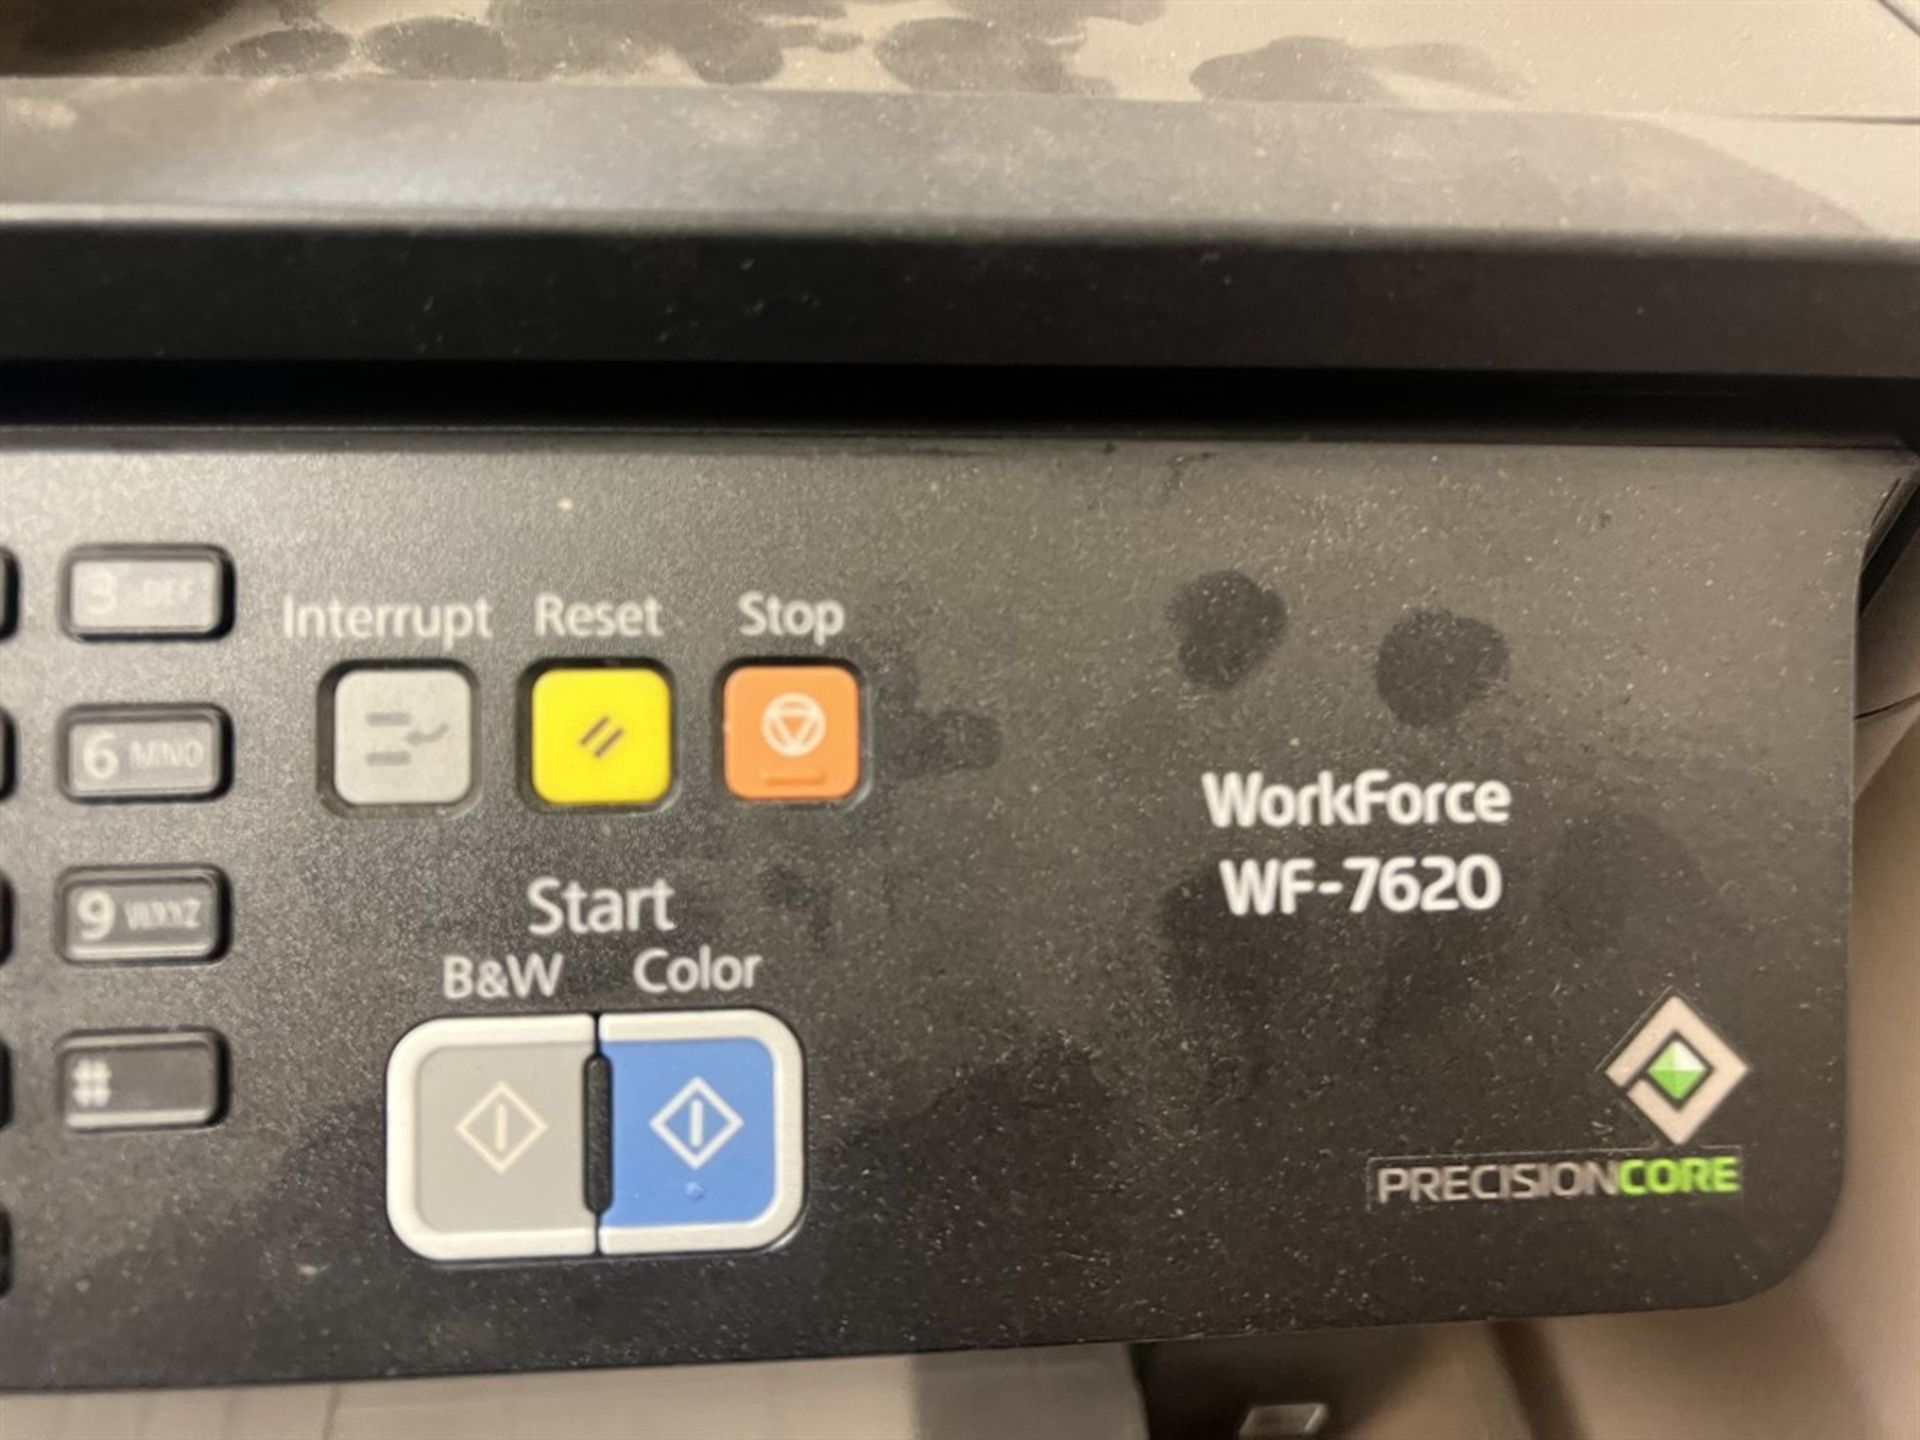 EPSON WF-7620 Workforce Printer - Image 4 of 4